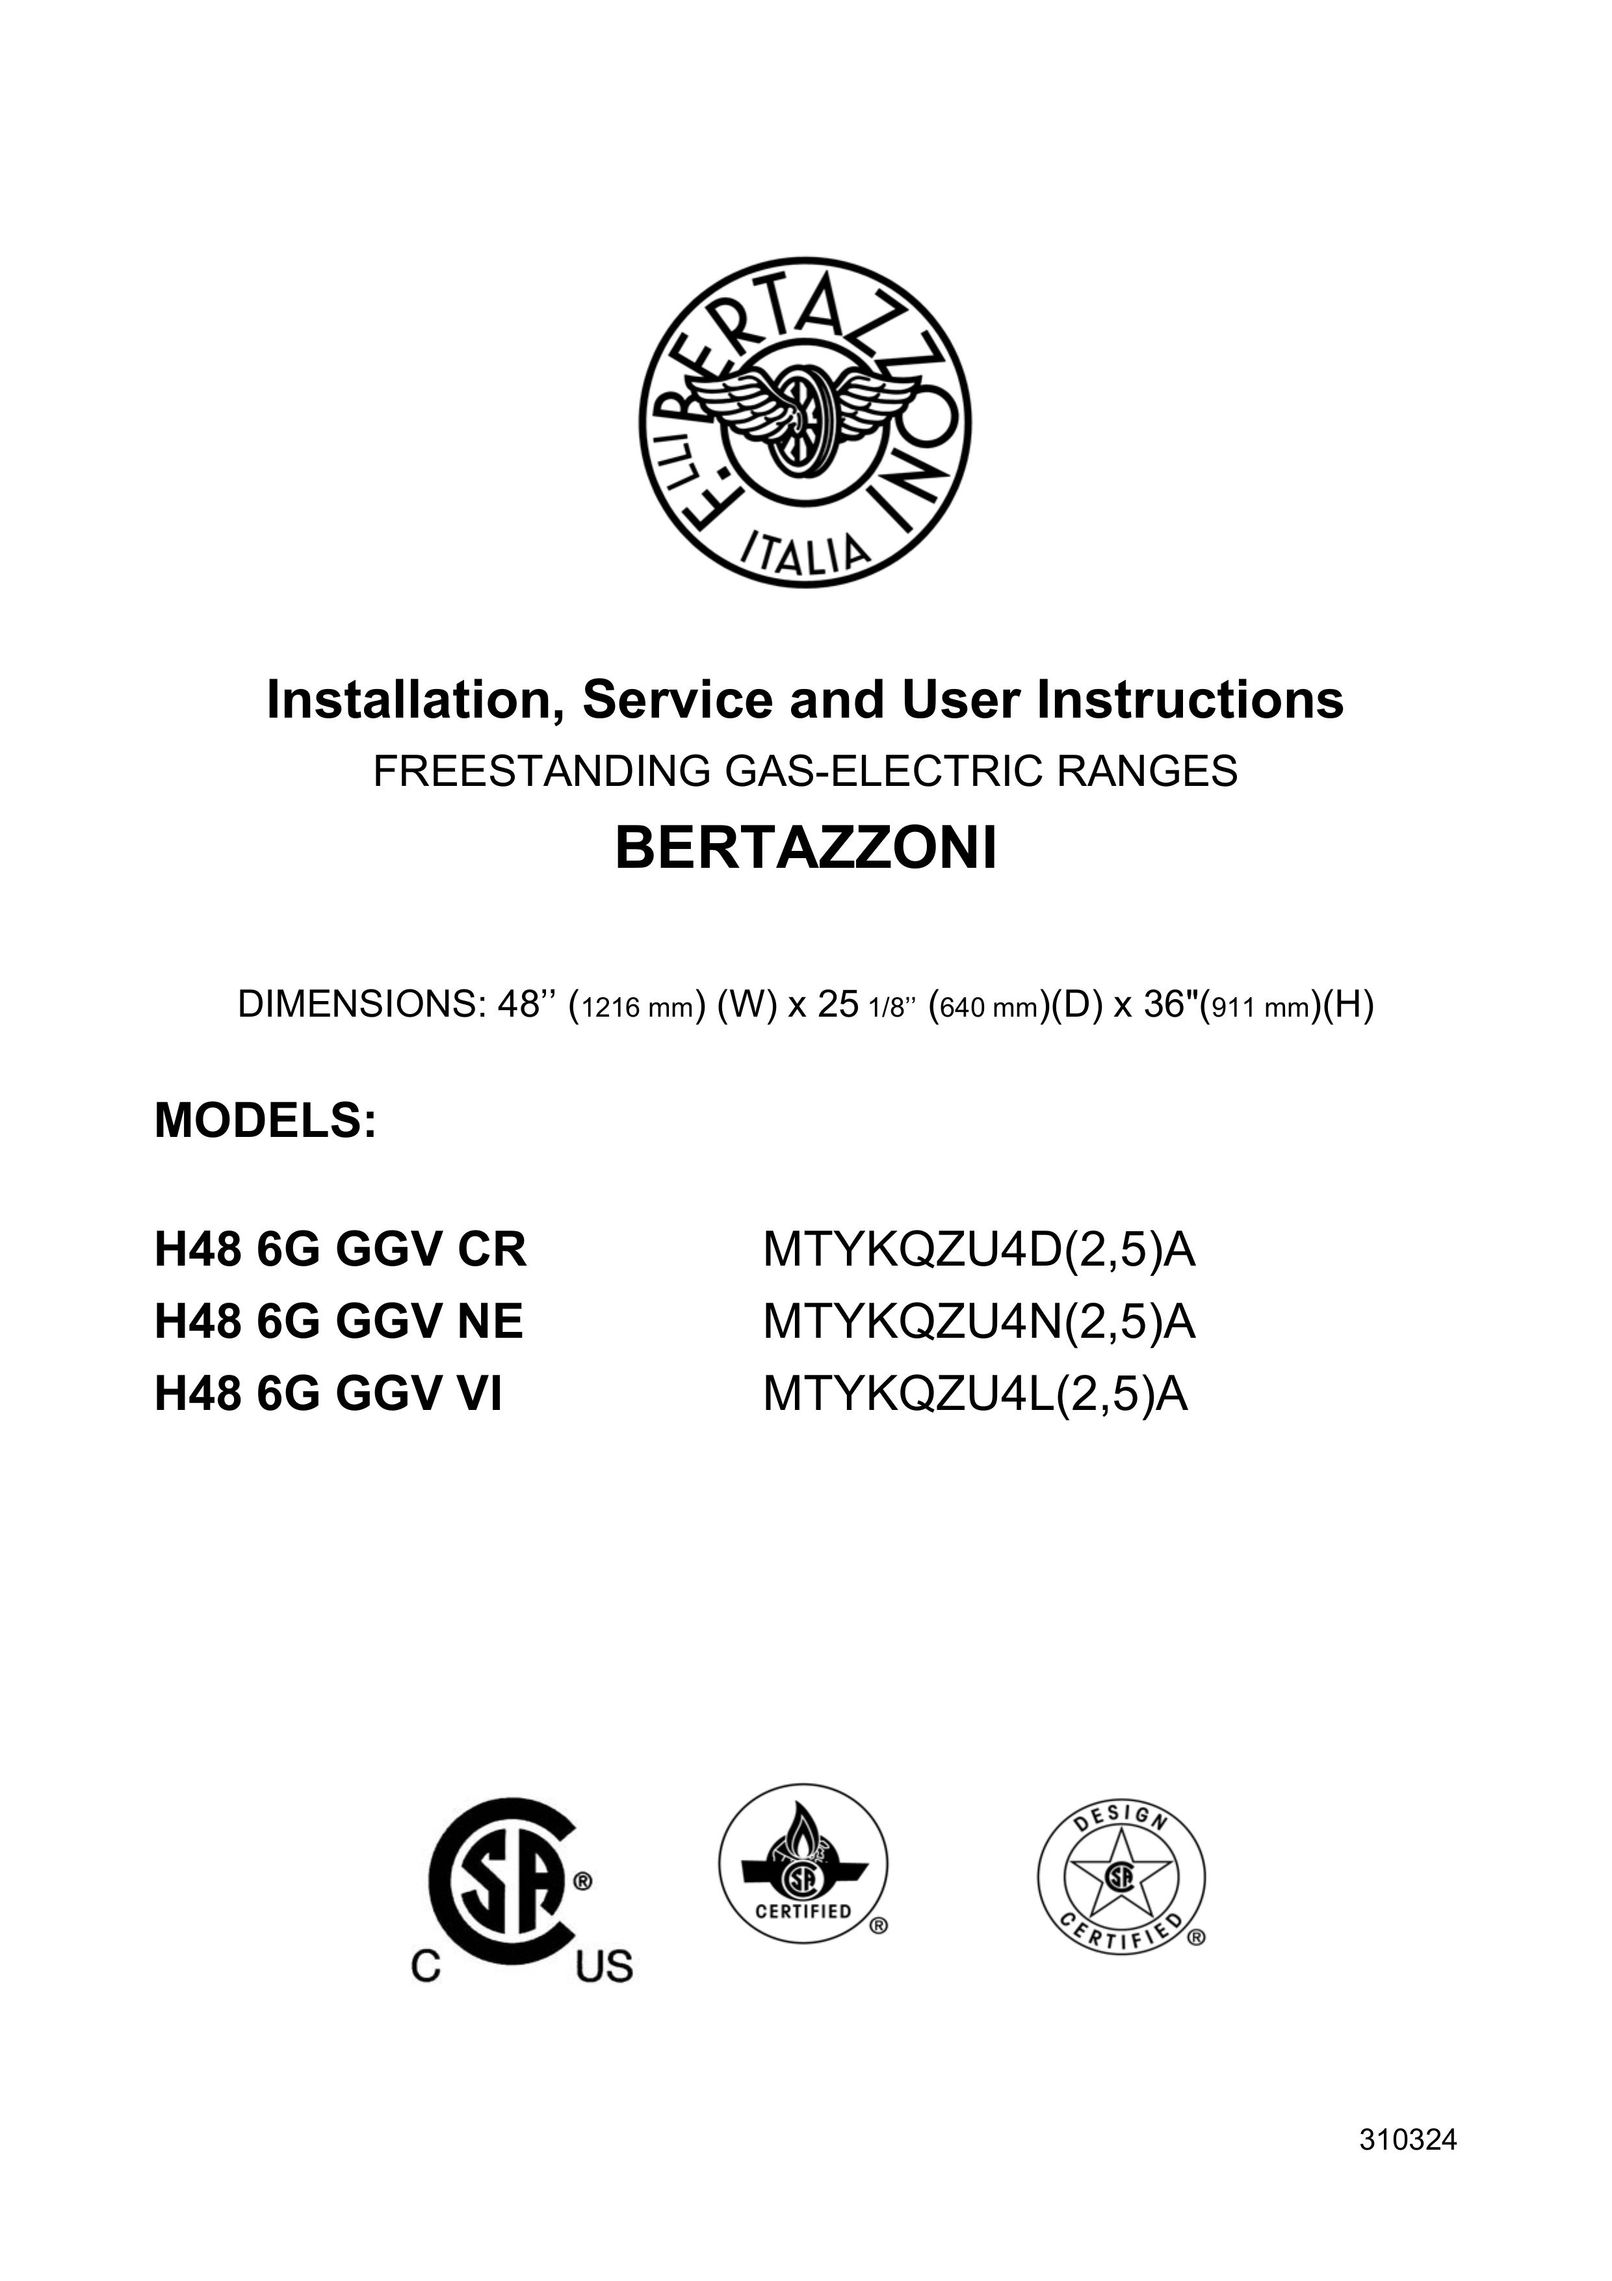 Bertazzoni H48 6G GGV NE Range User Manual